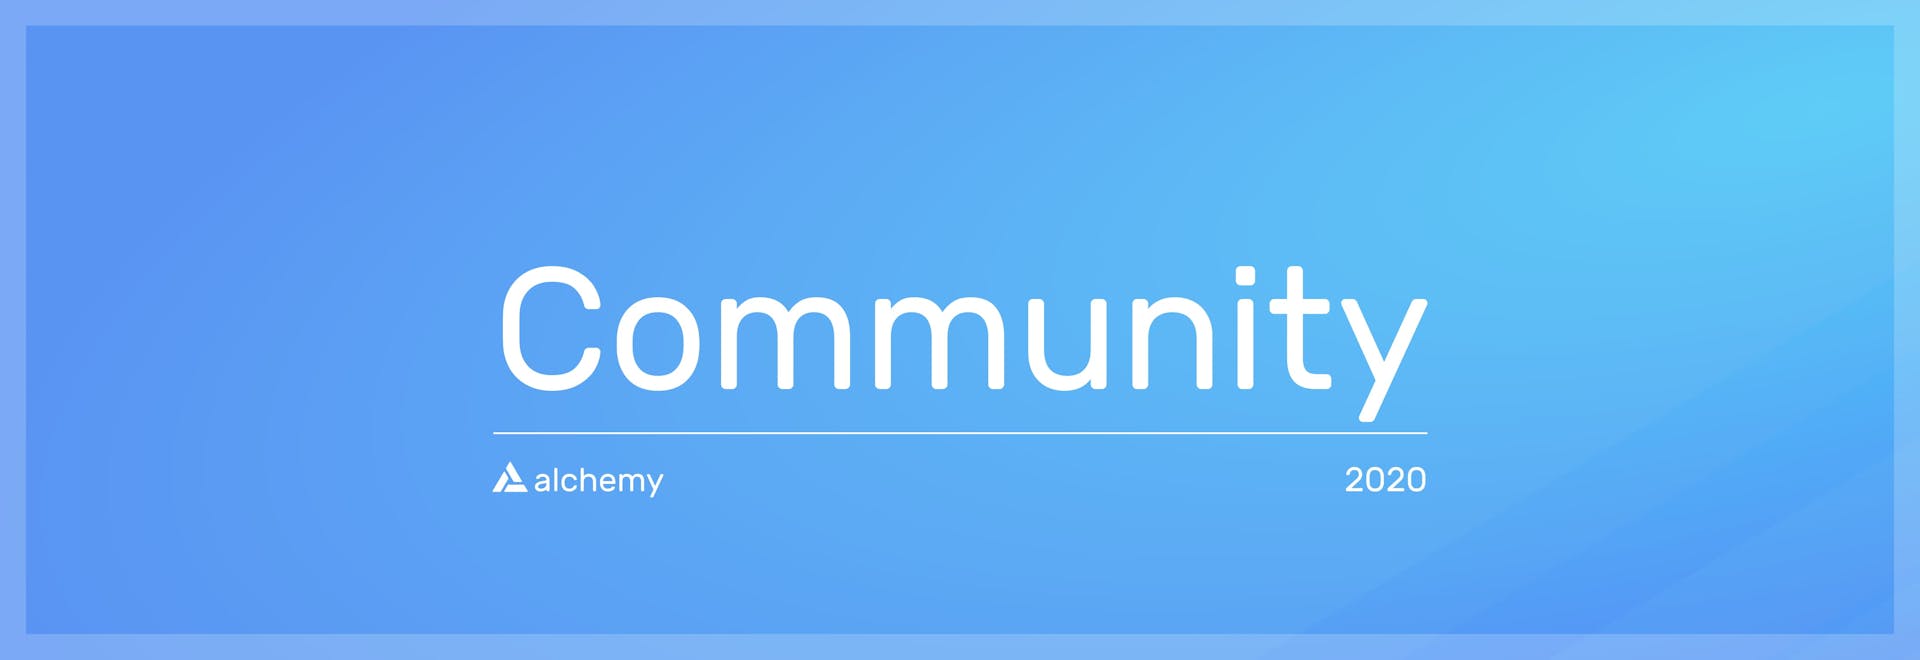 Community platforms 2020